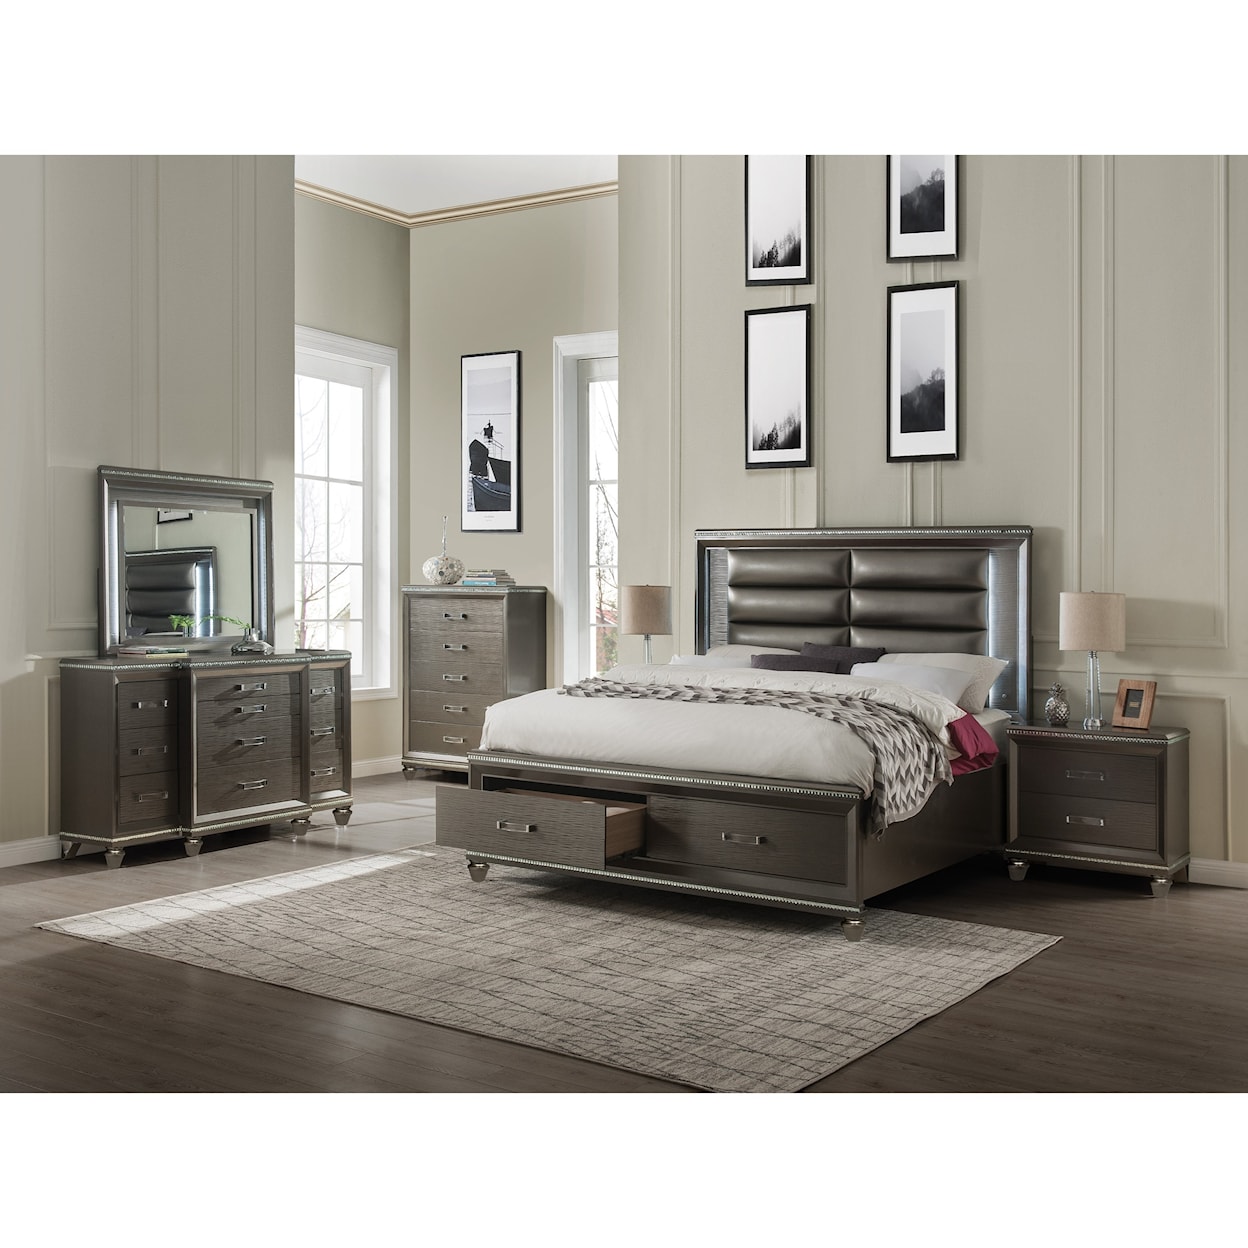 Acme Furniture Sadie Queen Bedroom Group